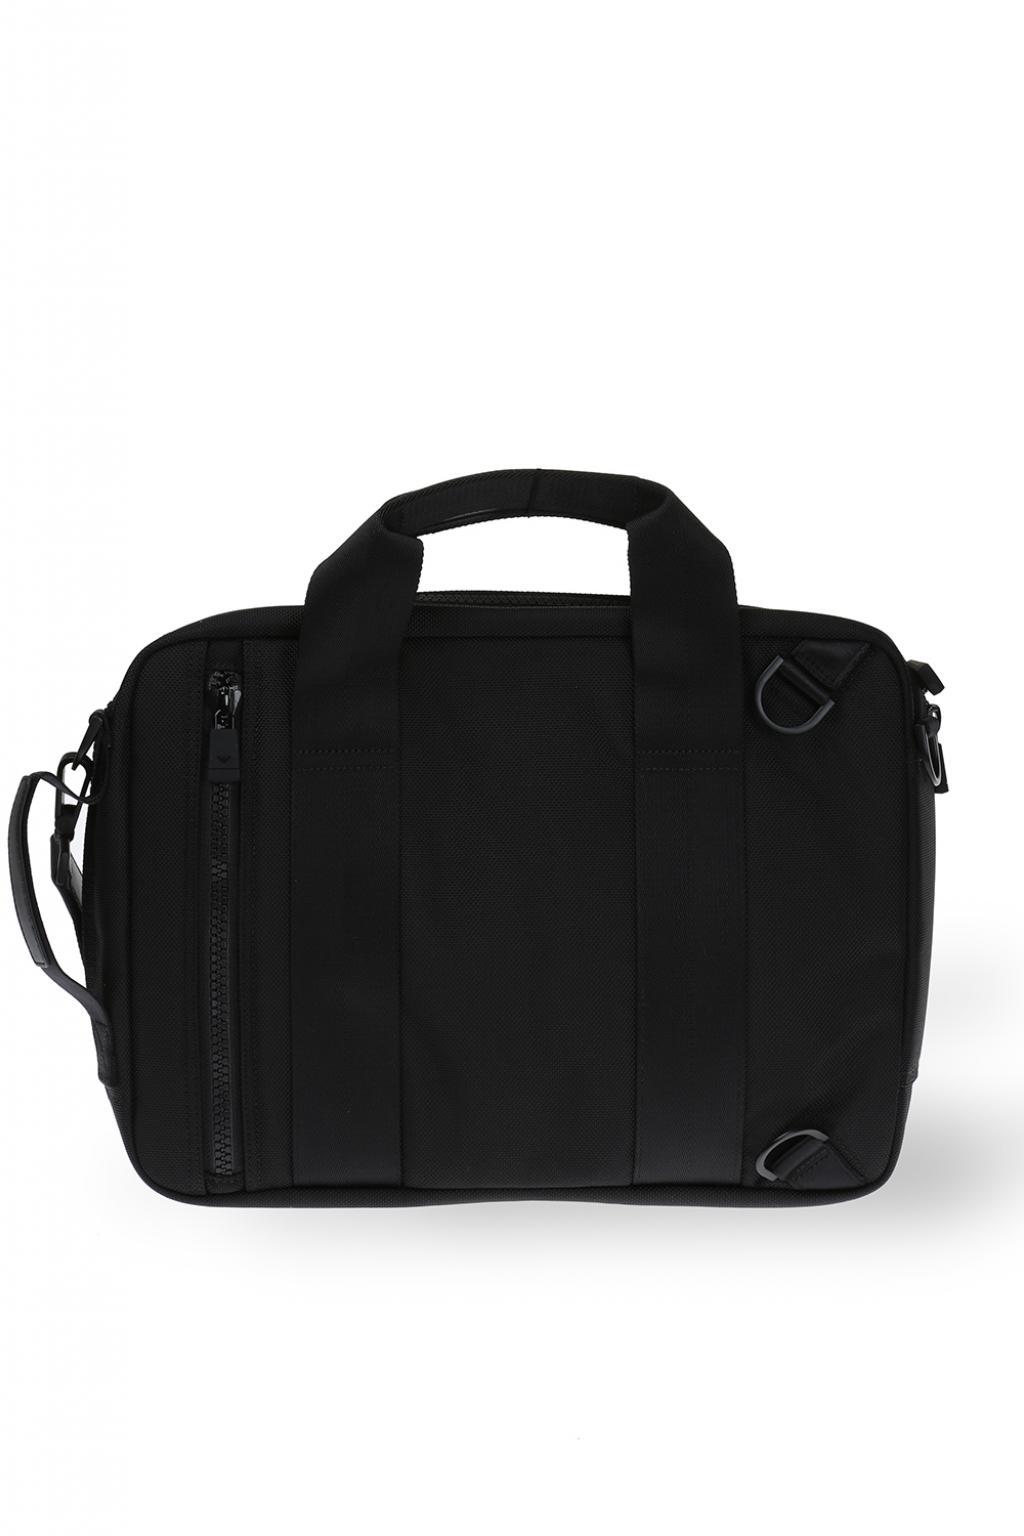 Emporio Armani Laptop Bag in Black for Men - Lyst